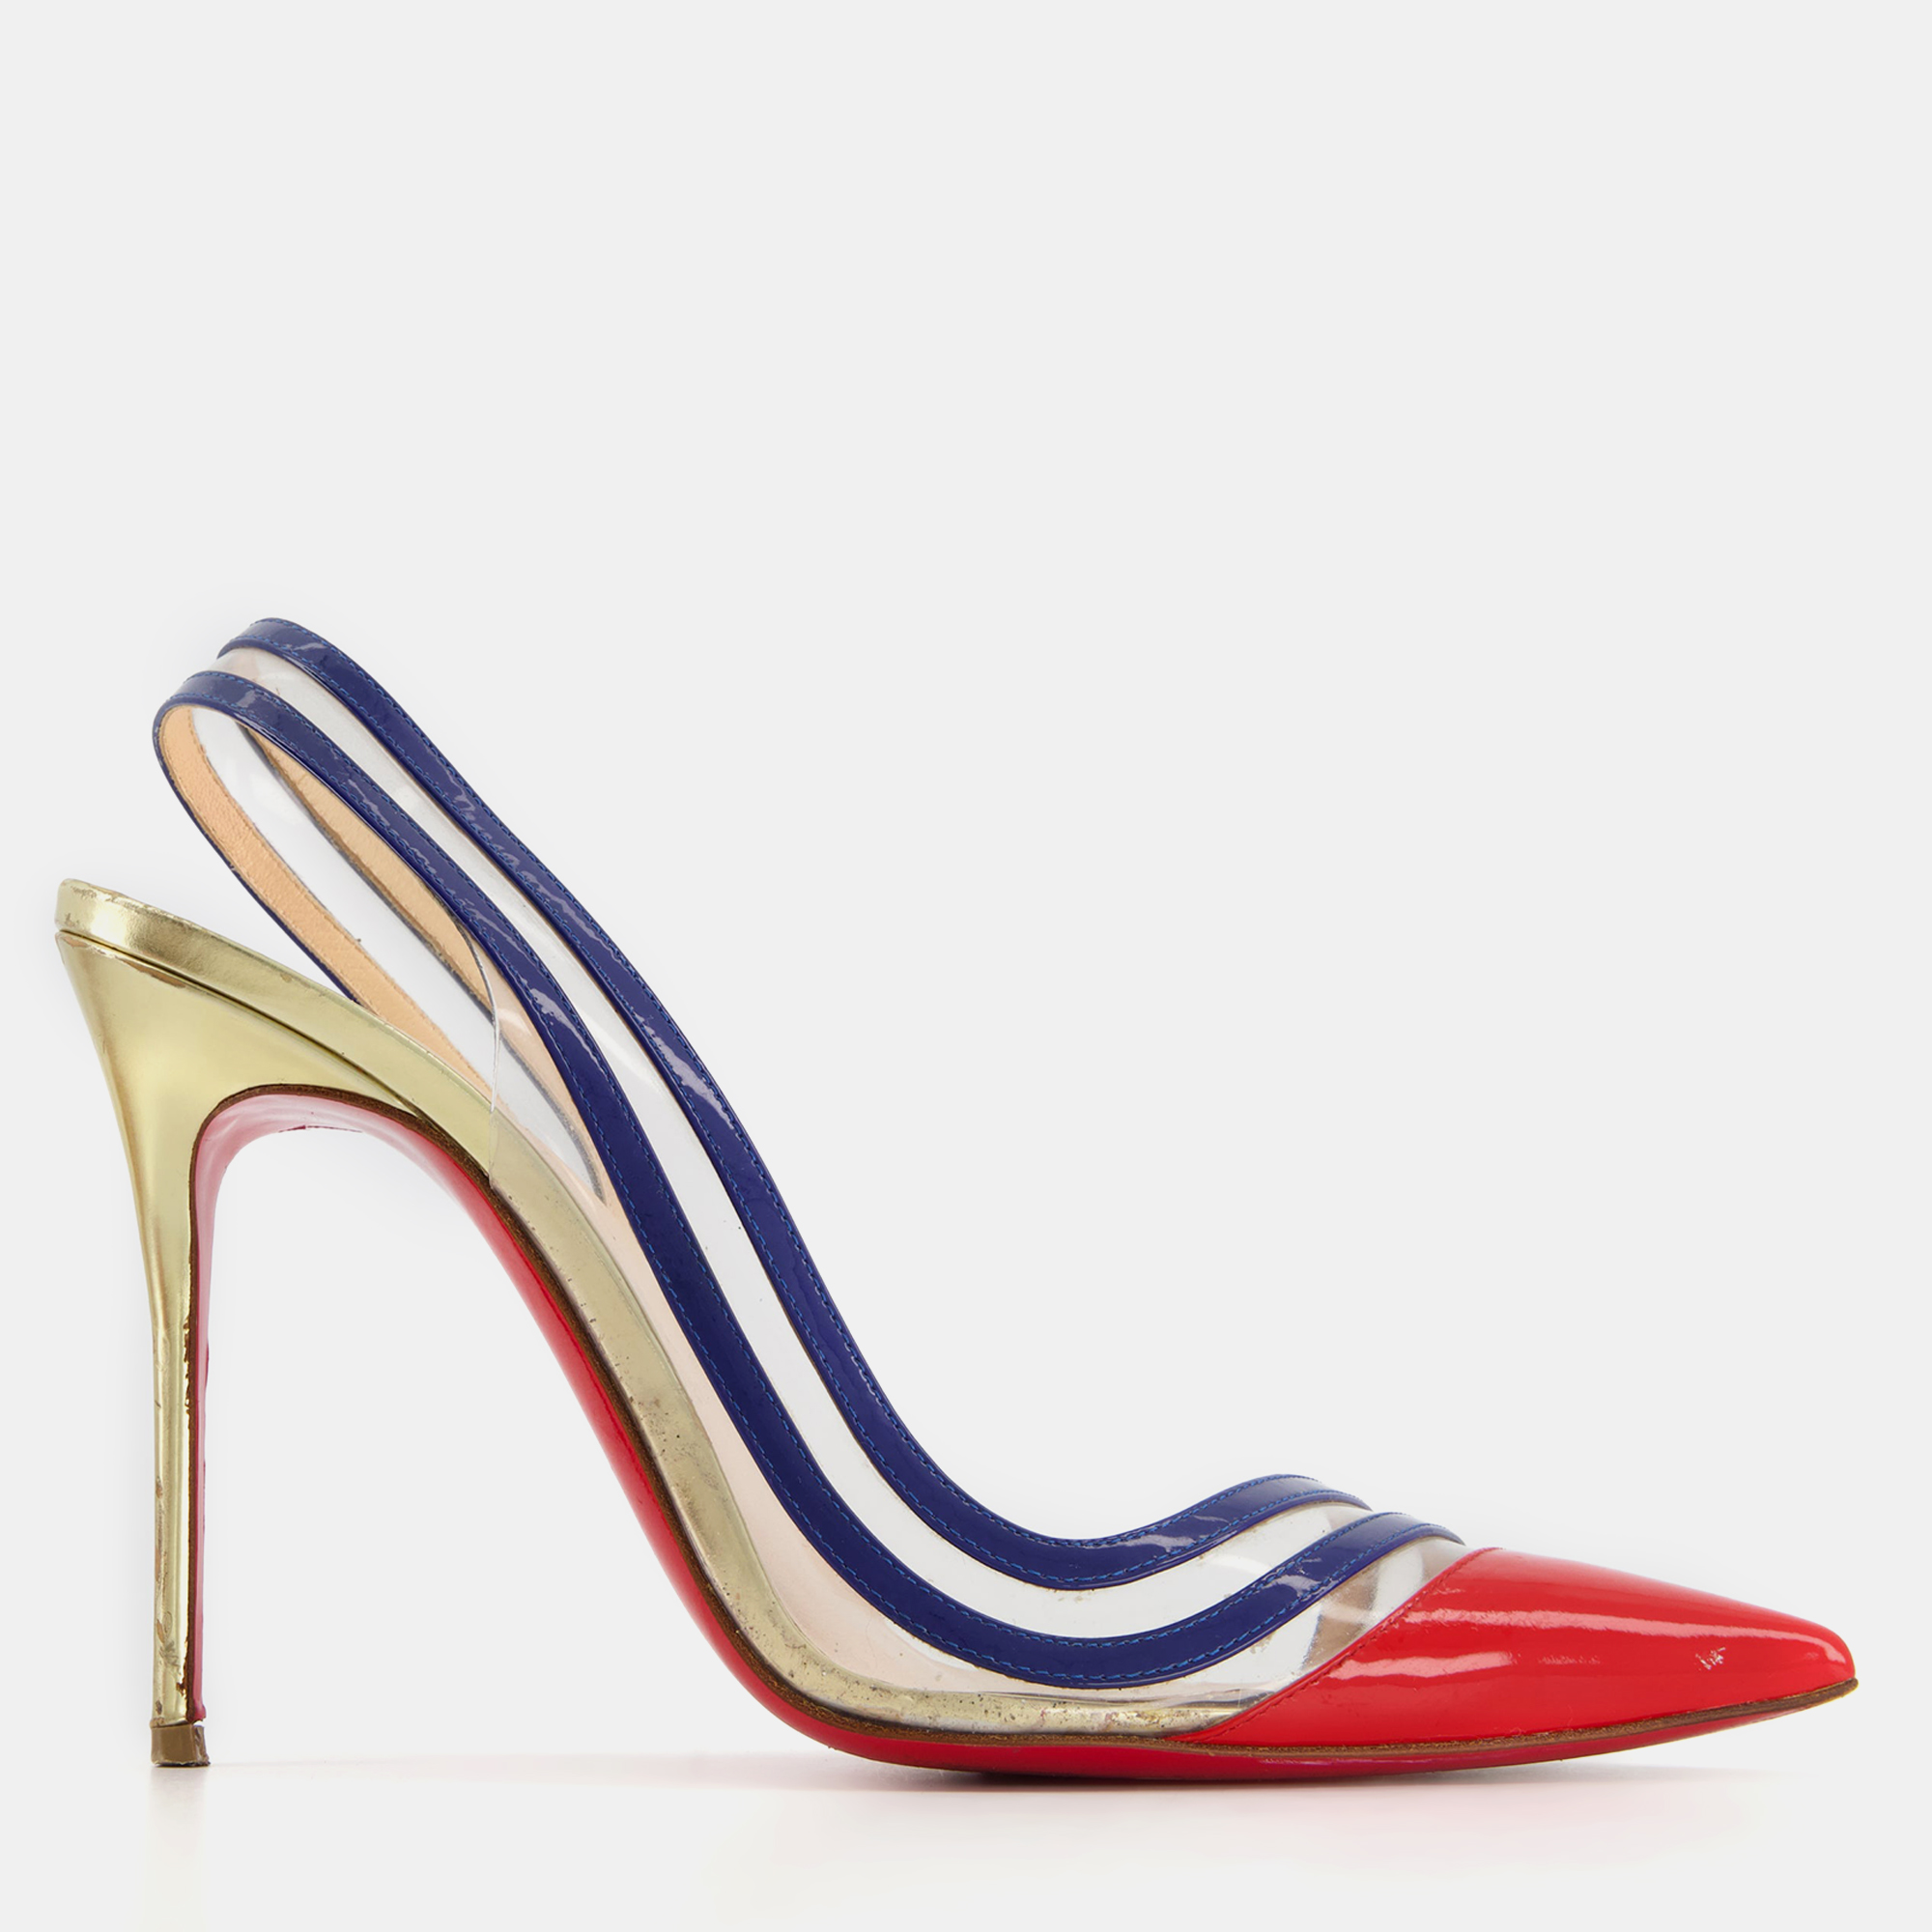 Christian louboutin blue, red and gold pvc heel size eu 41